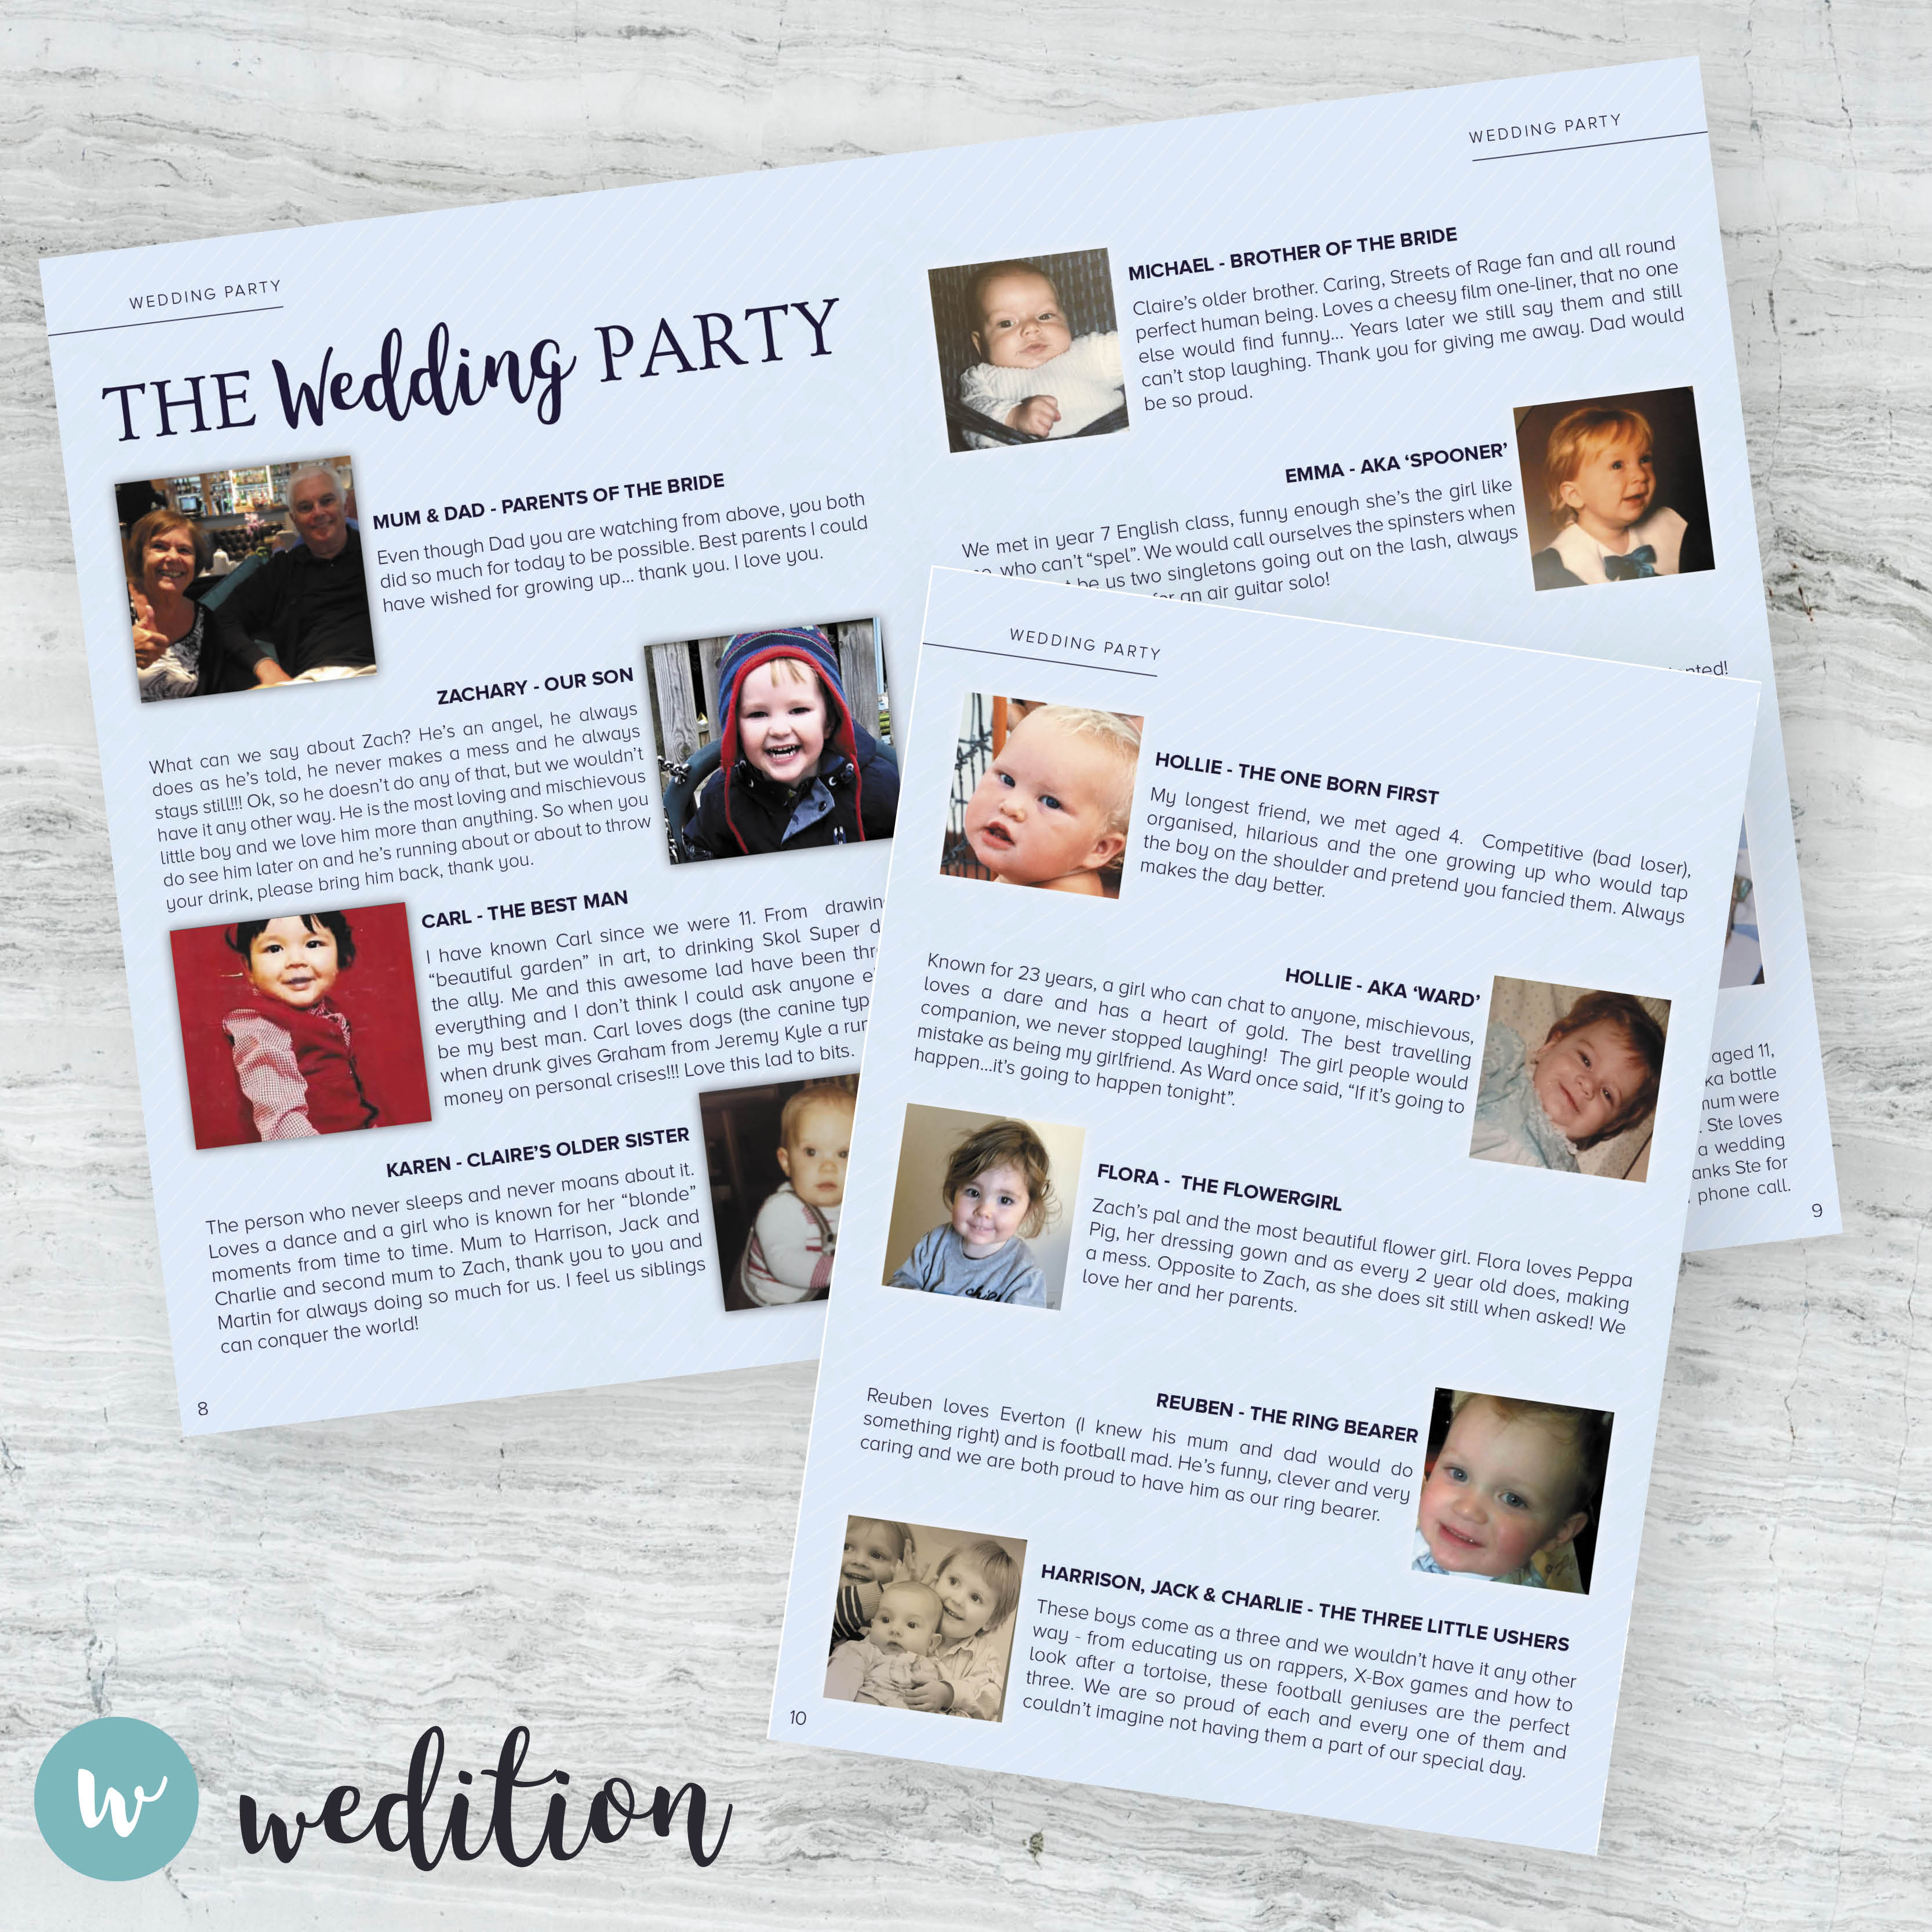 Unique wedding party ideas for your wedding guests, wedding party quiz